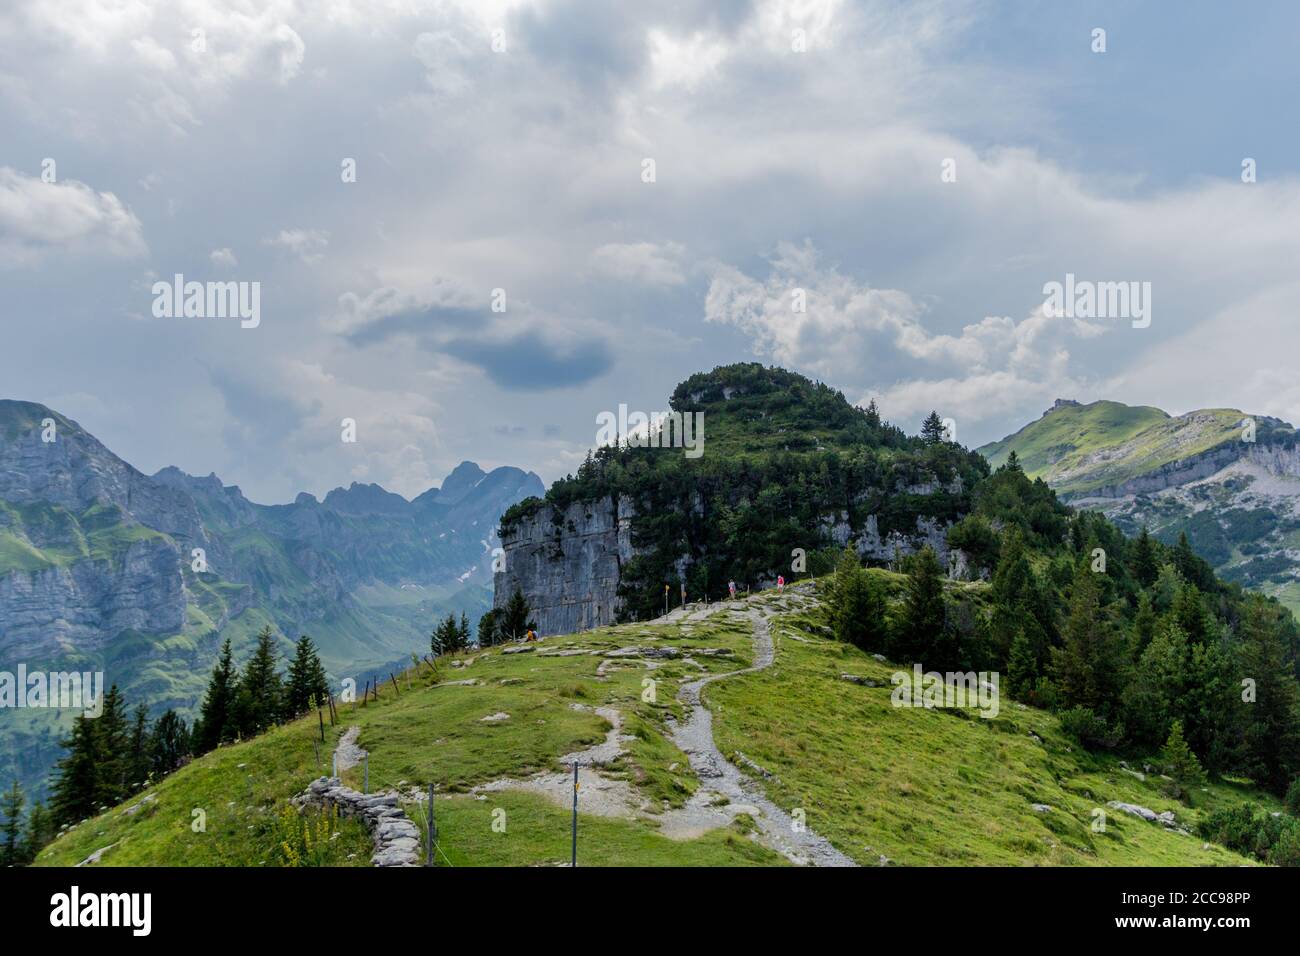 Beautiful exploration tour through the Appenzell mountains in Switzerland. - Appenzell/Alpstein/Switzerland Stock Photo